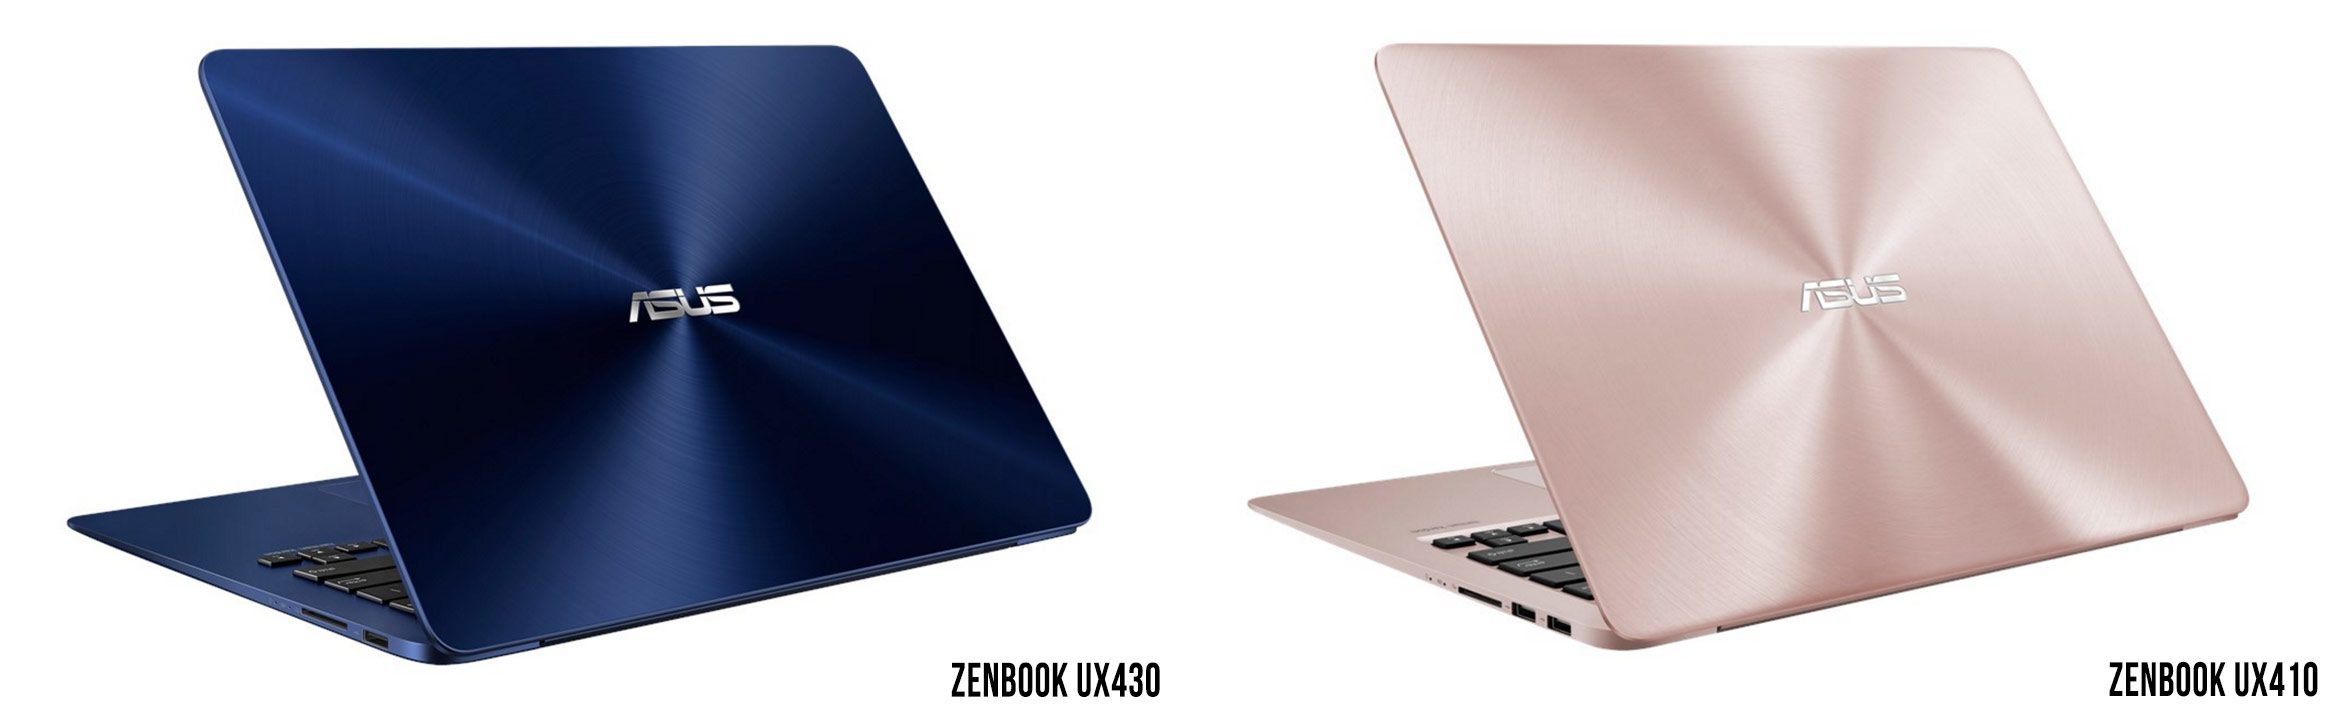 Asus Zenbook UX430 vs UX410 vs UX3410 - what sets these apart